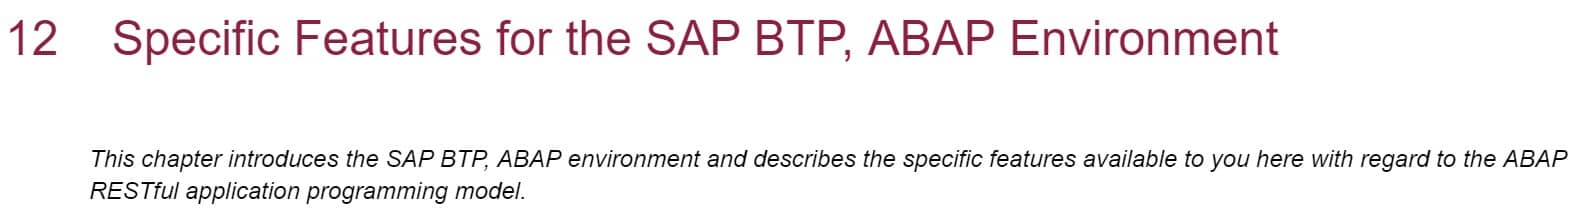 فصل 12 کتاب ABAP RESTful Application Programming Model